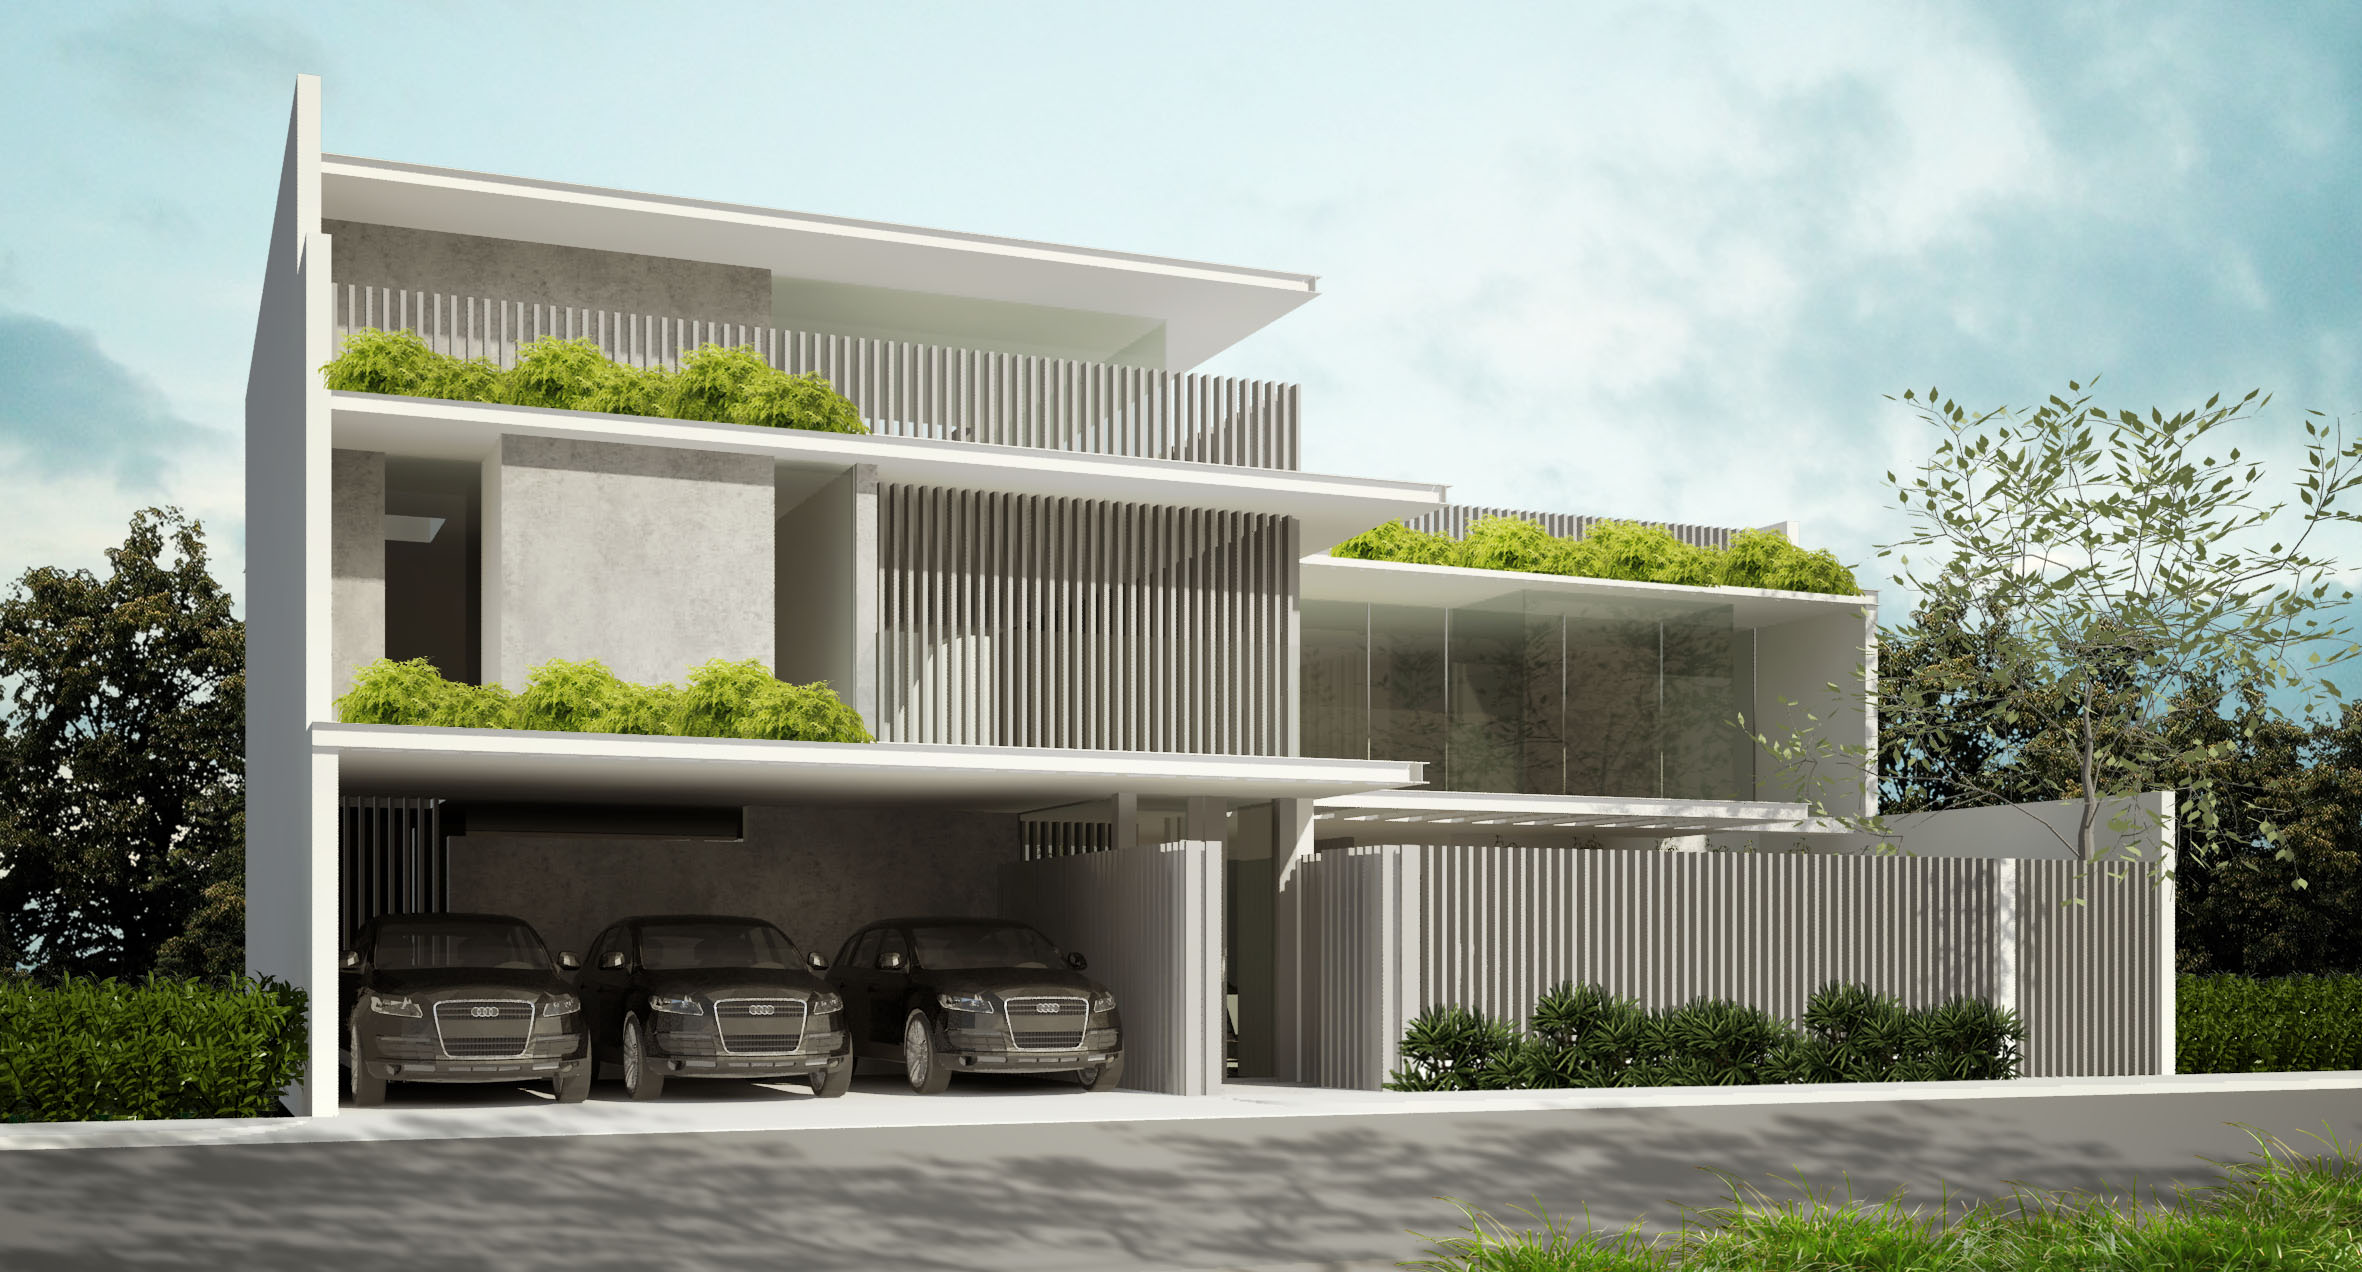 Premium real estate developer makes ‘luxury sustainability’ even more possible